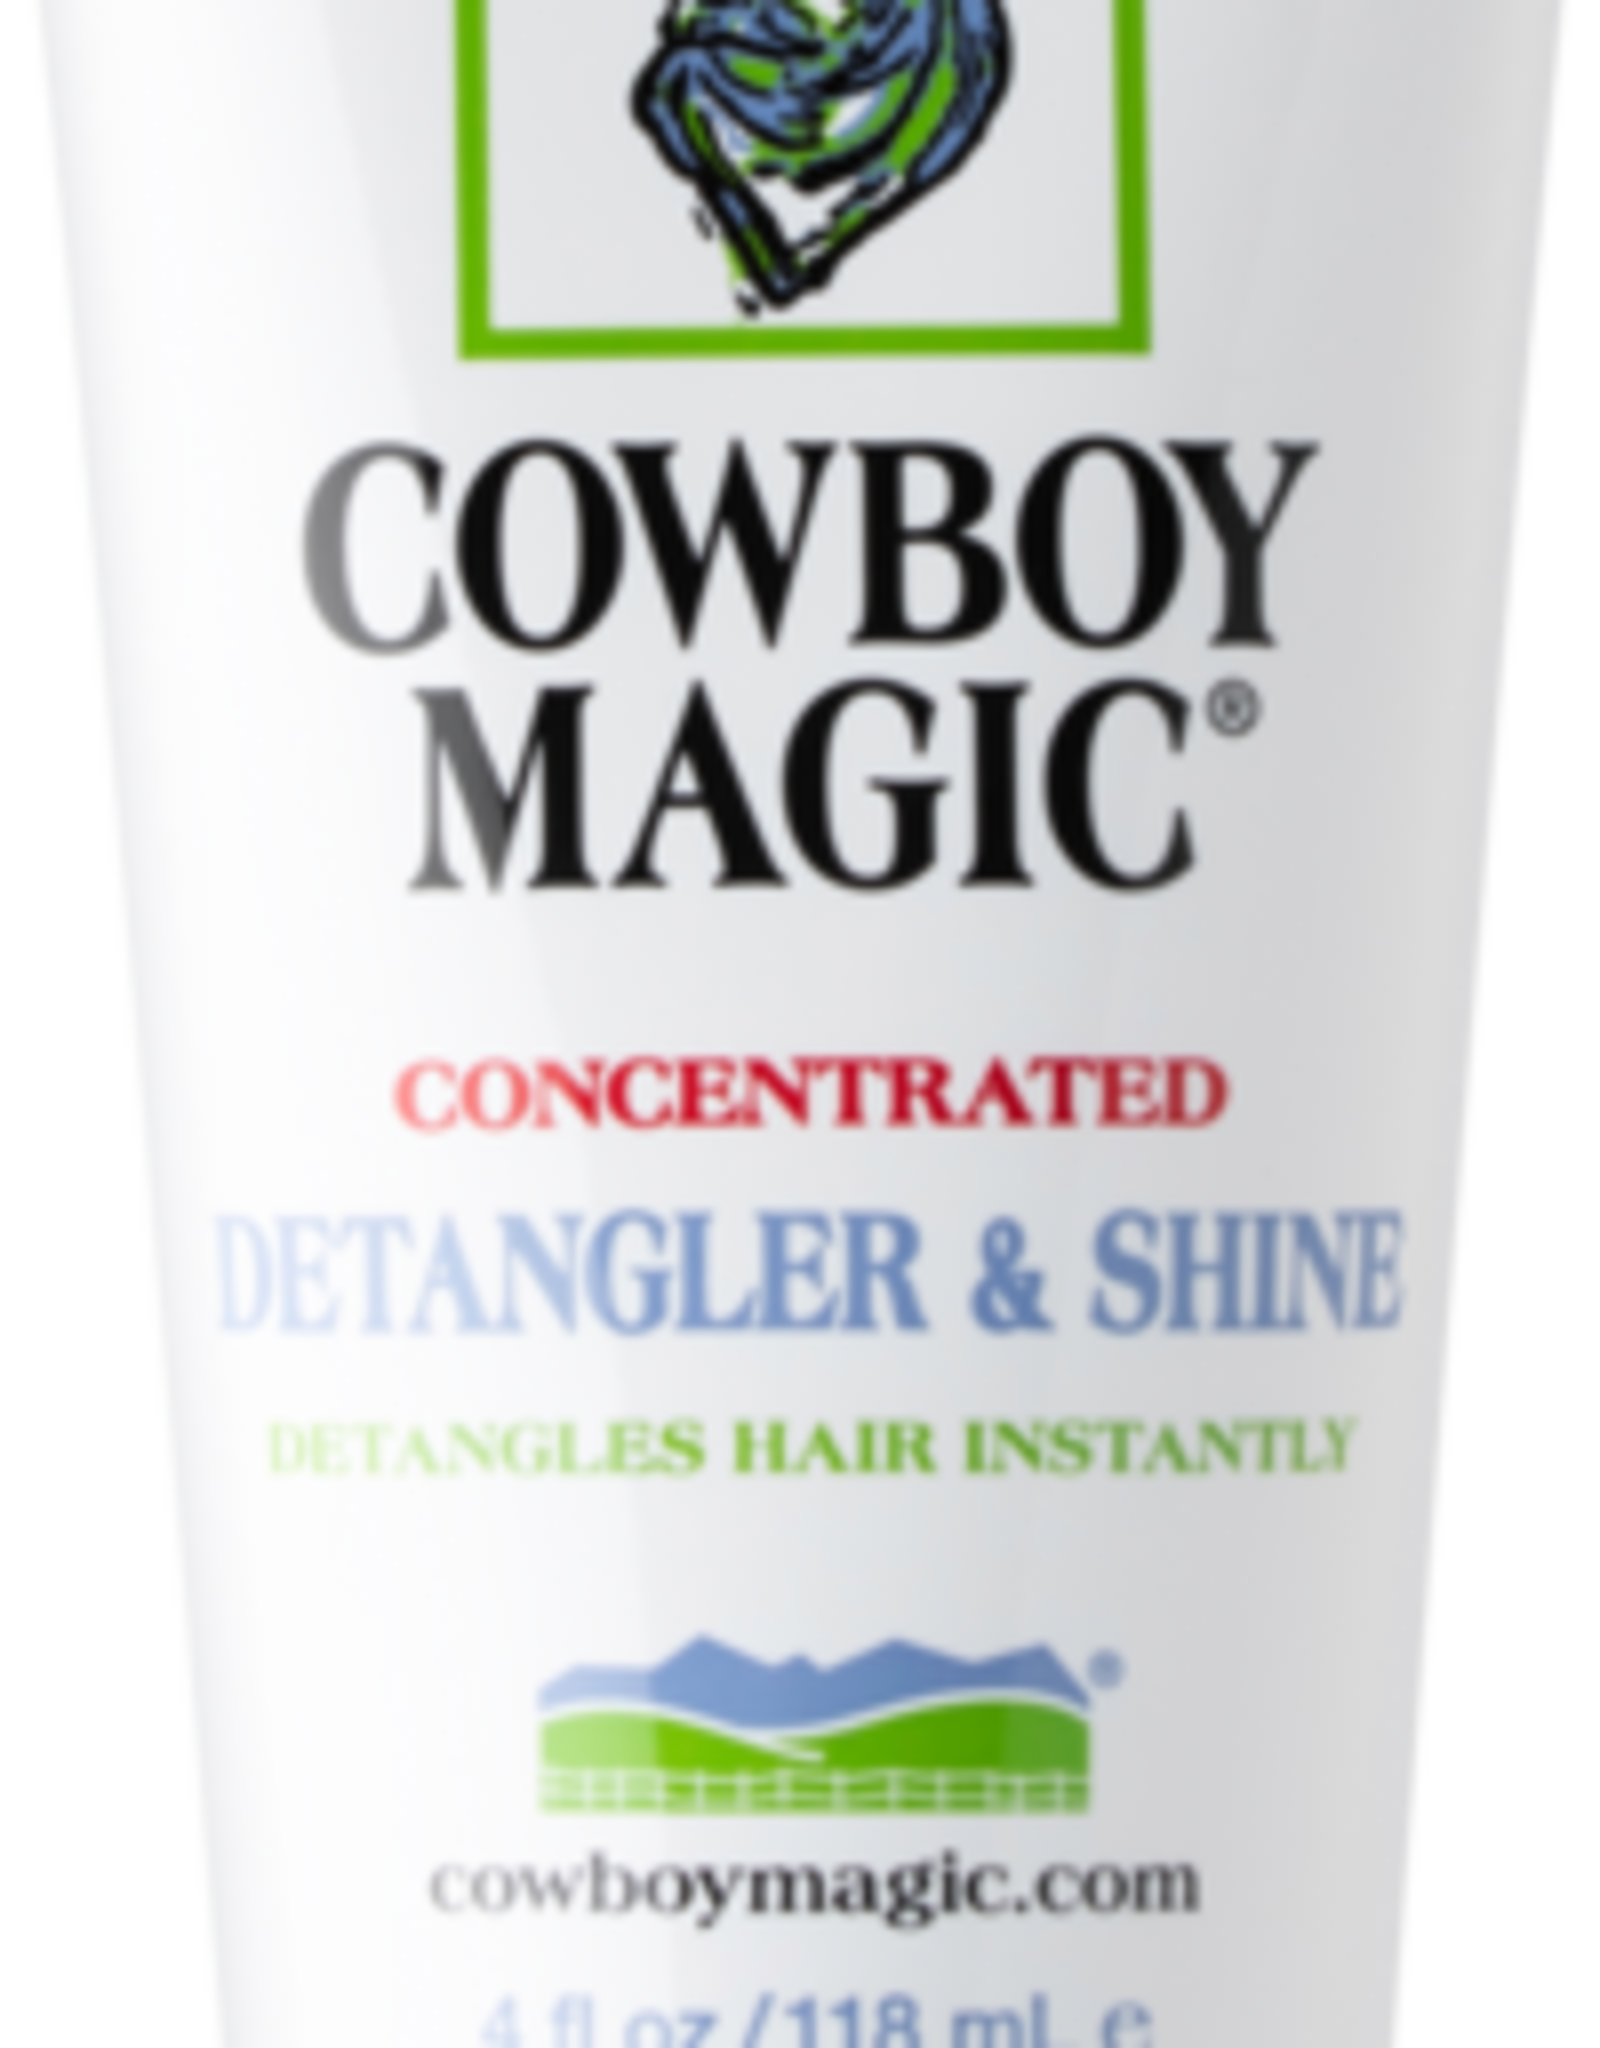 Cowboy Magic Detangler and Shine